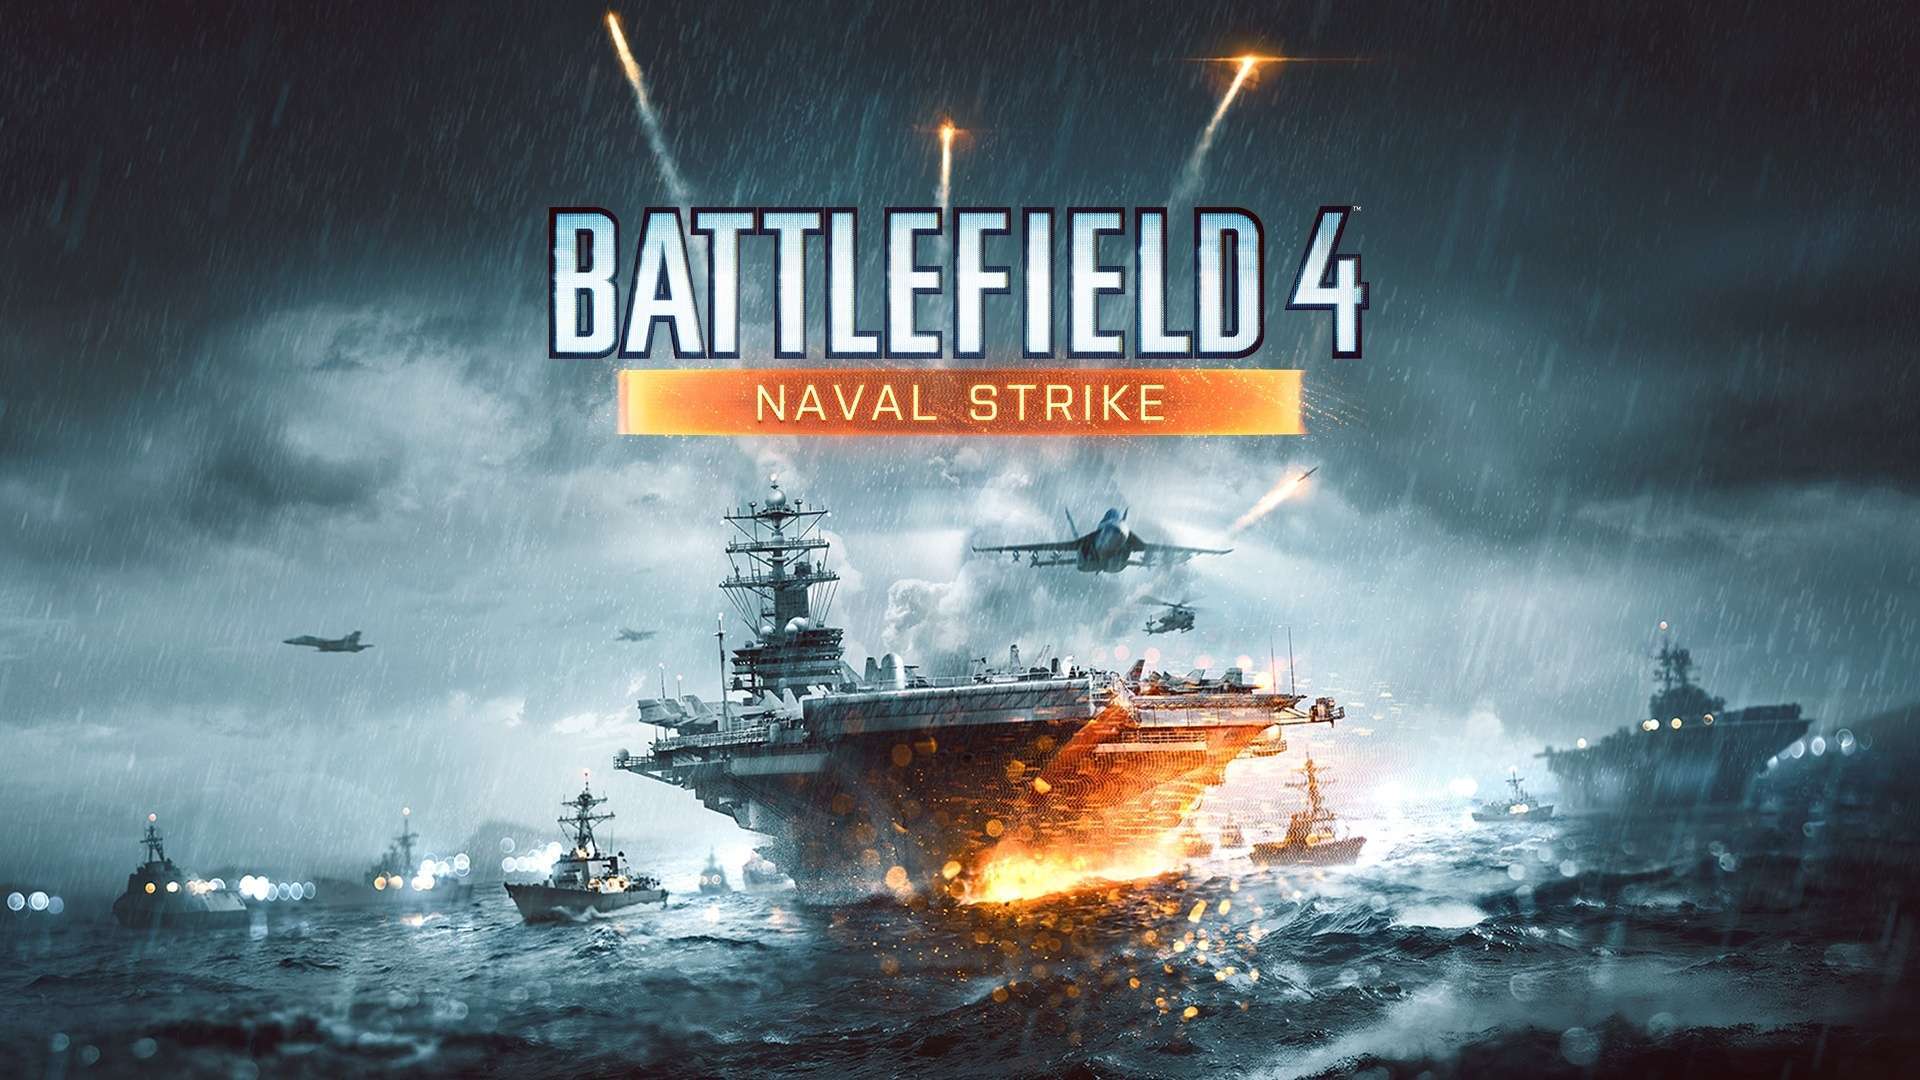 Wallpaper Battlefield 4 Naval Strike HD Wallpaper 1080p Upload at